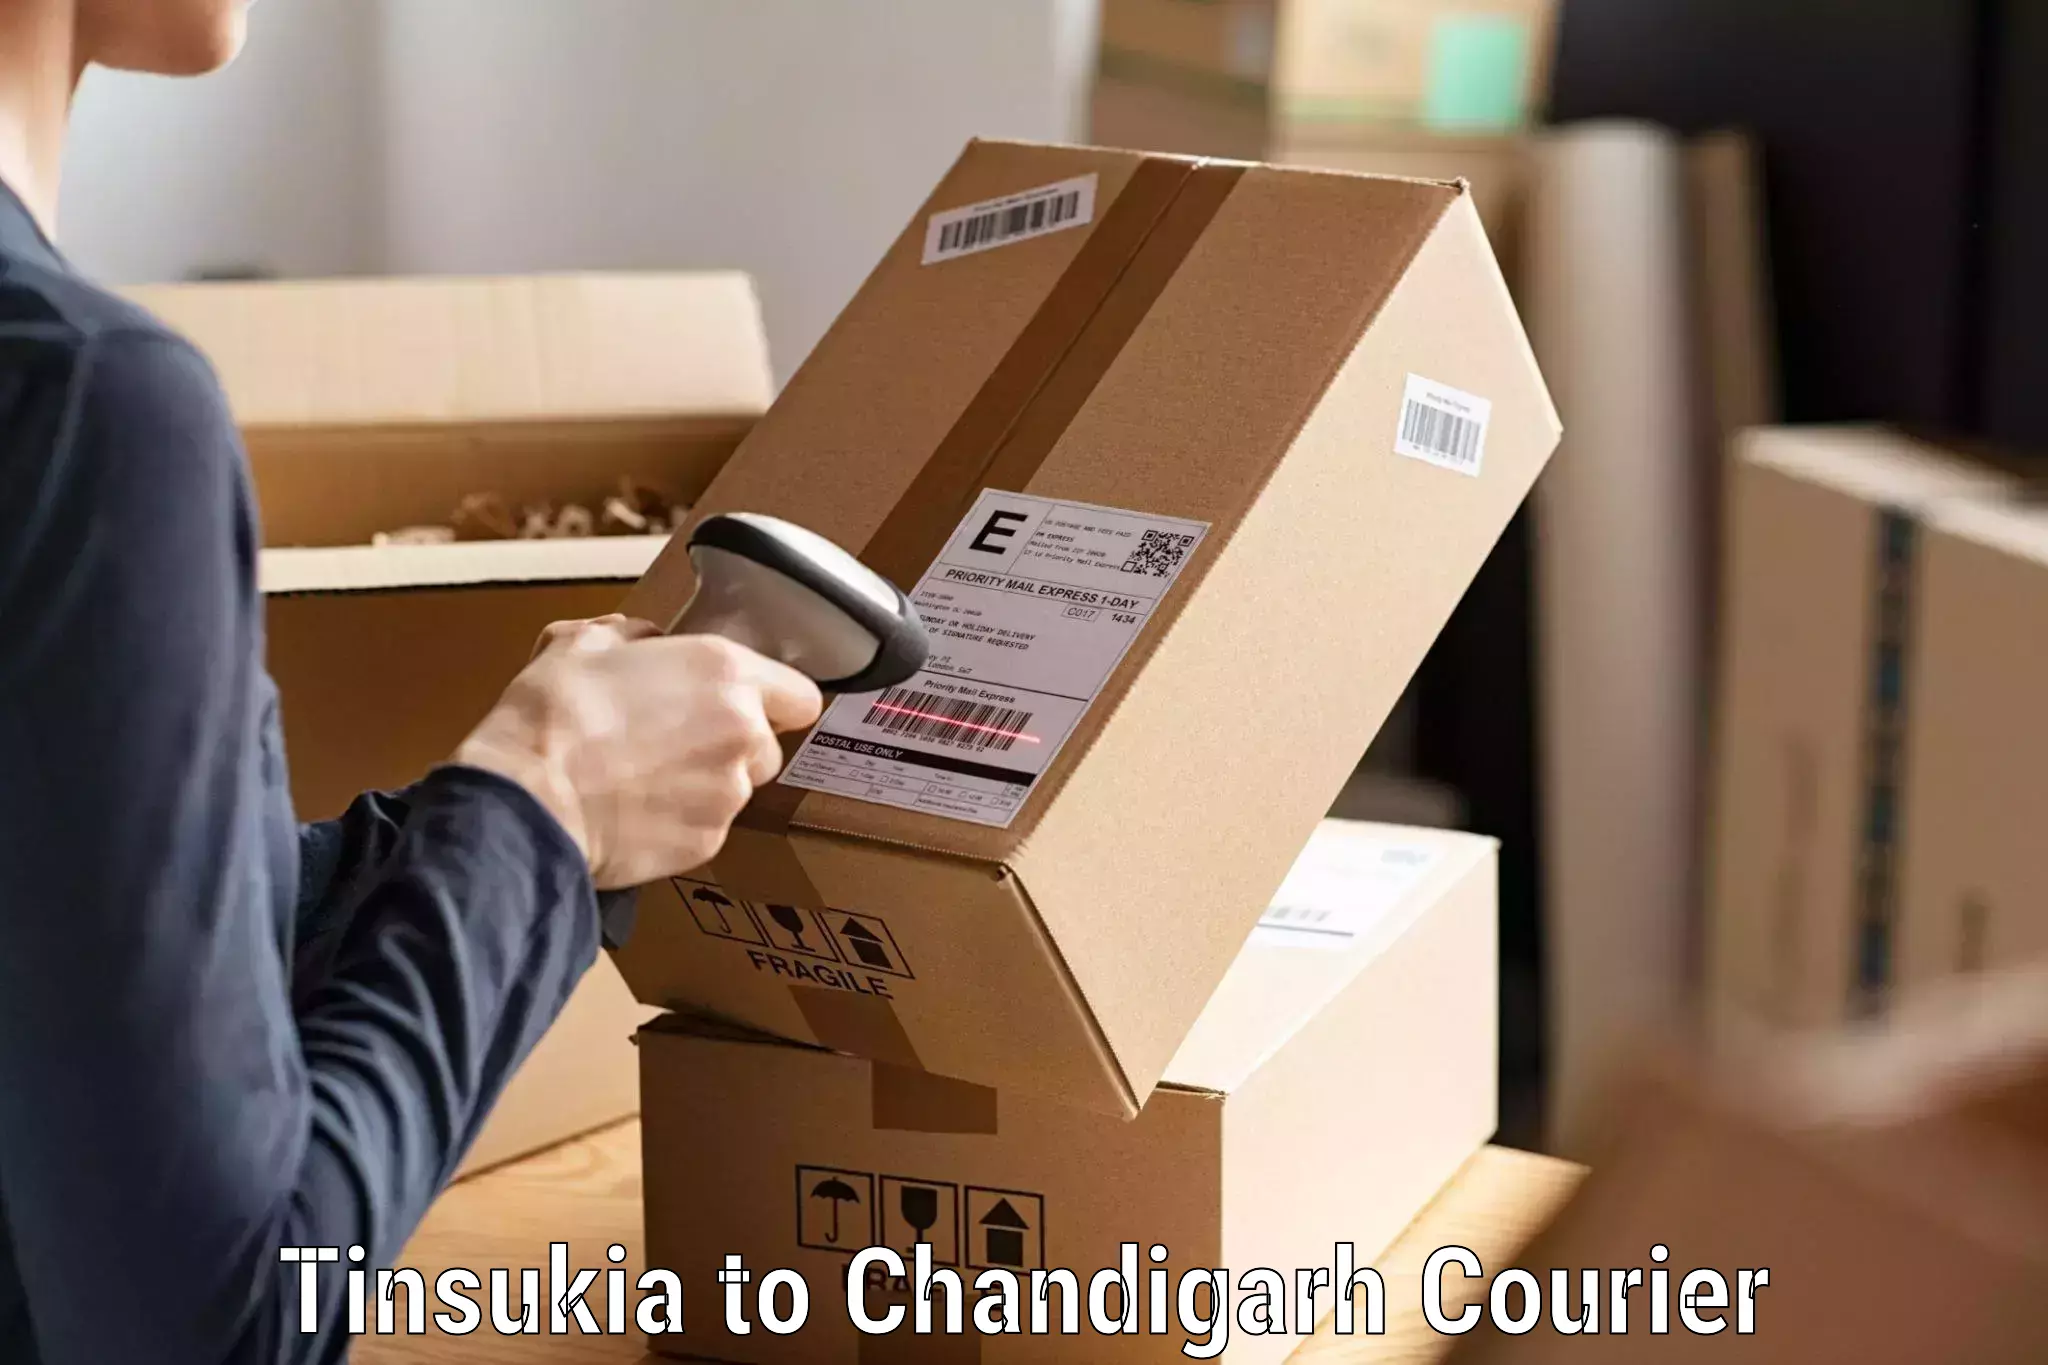 Speedy delivery service Tinsukia to Chandigarh